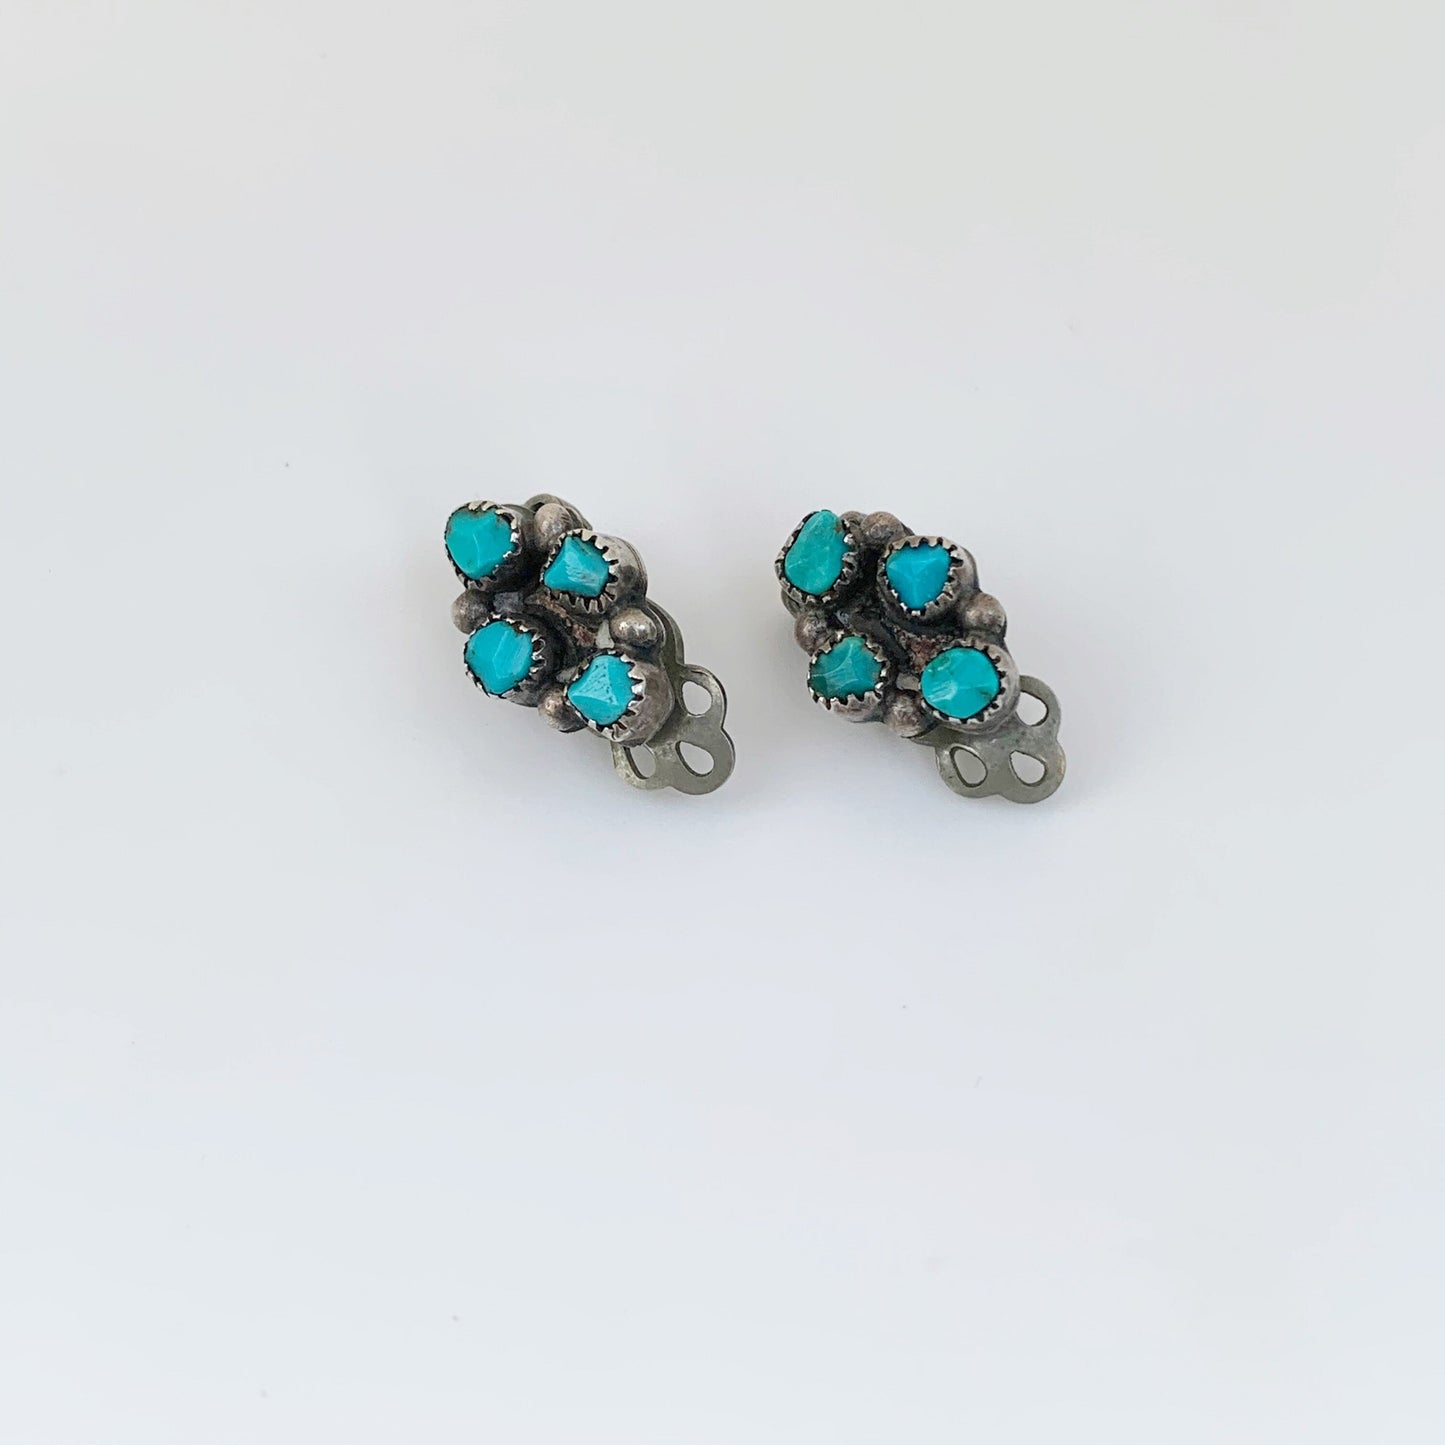 Vintage Turquoise Cluster Earrings | Snake Eye Cluster Earrings | Turquoise Clip On Earrings